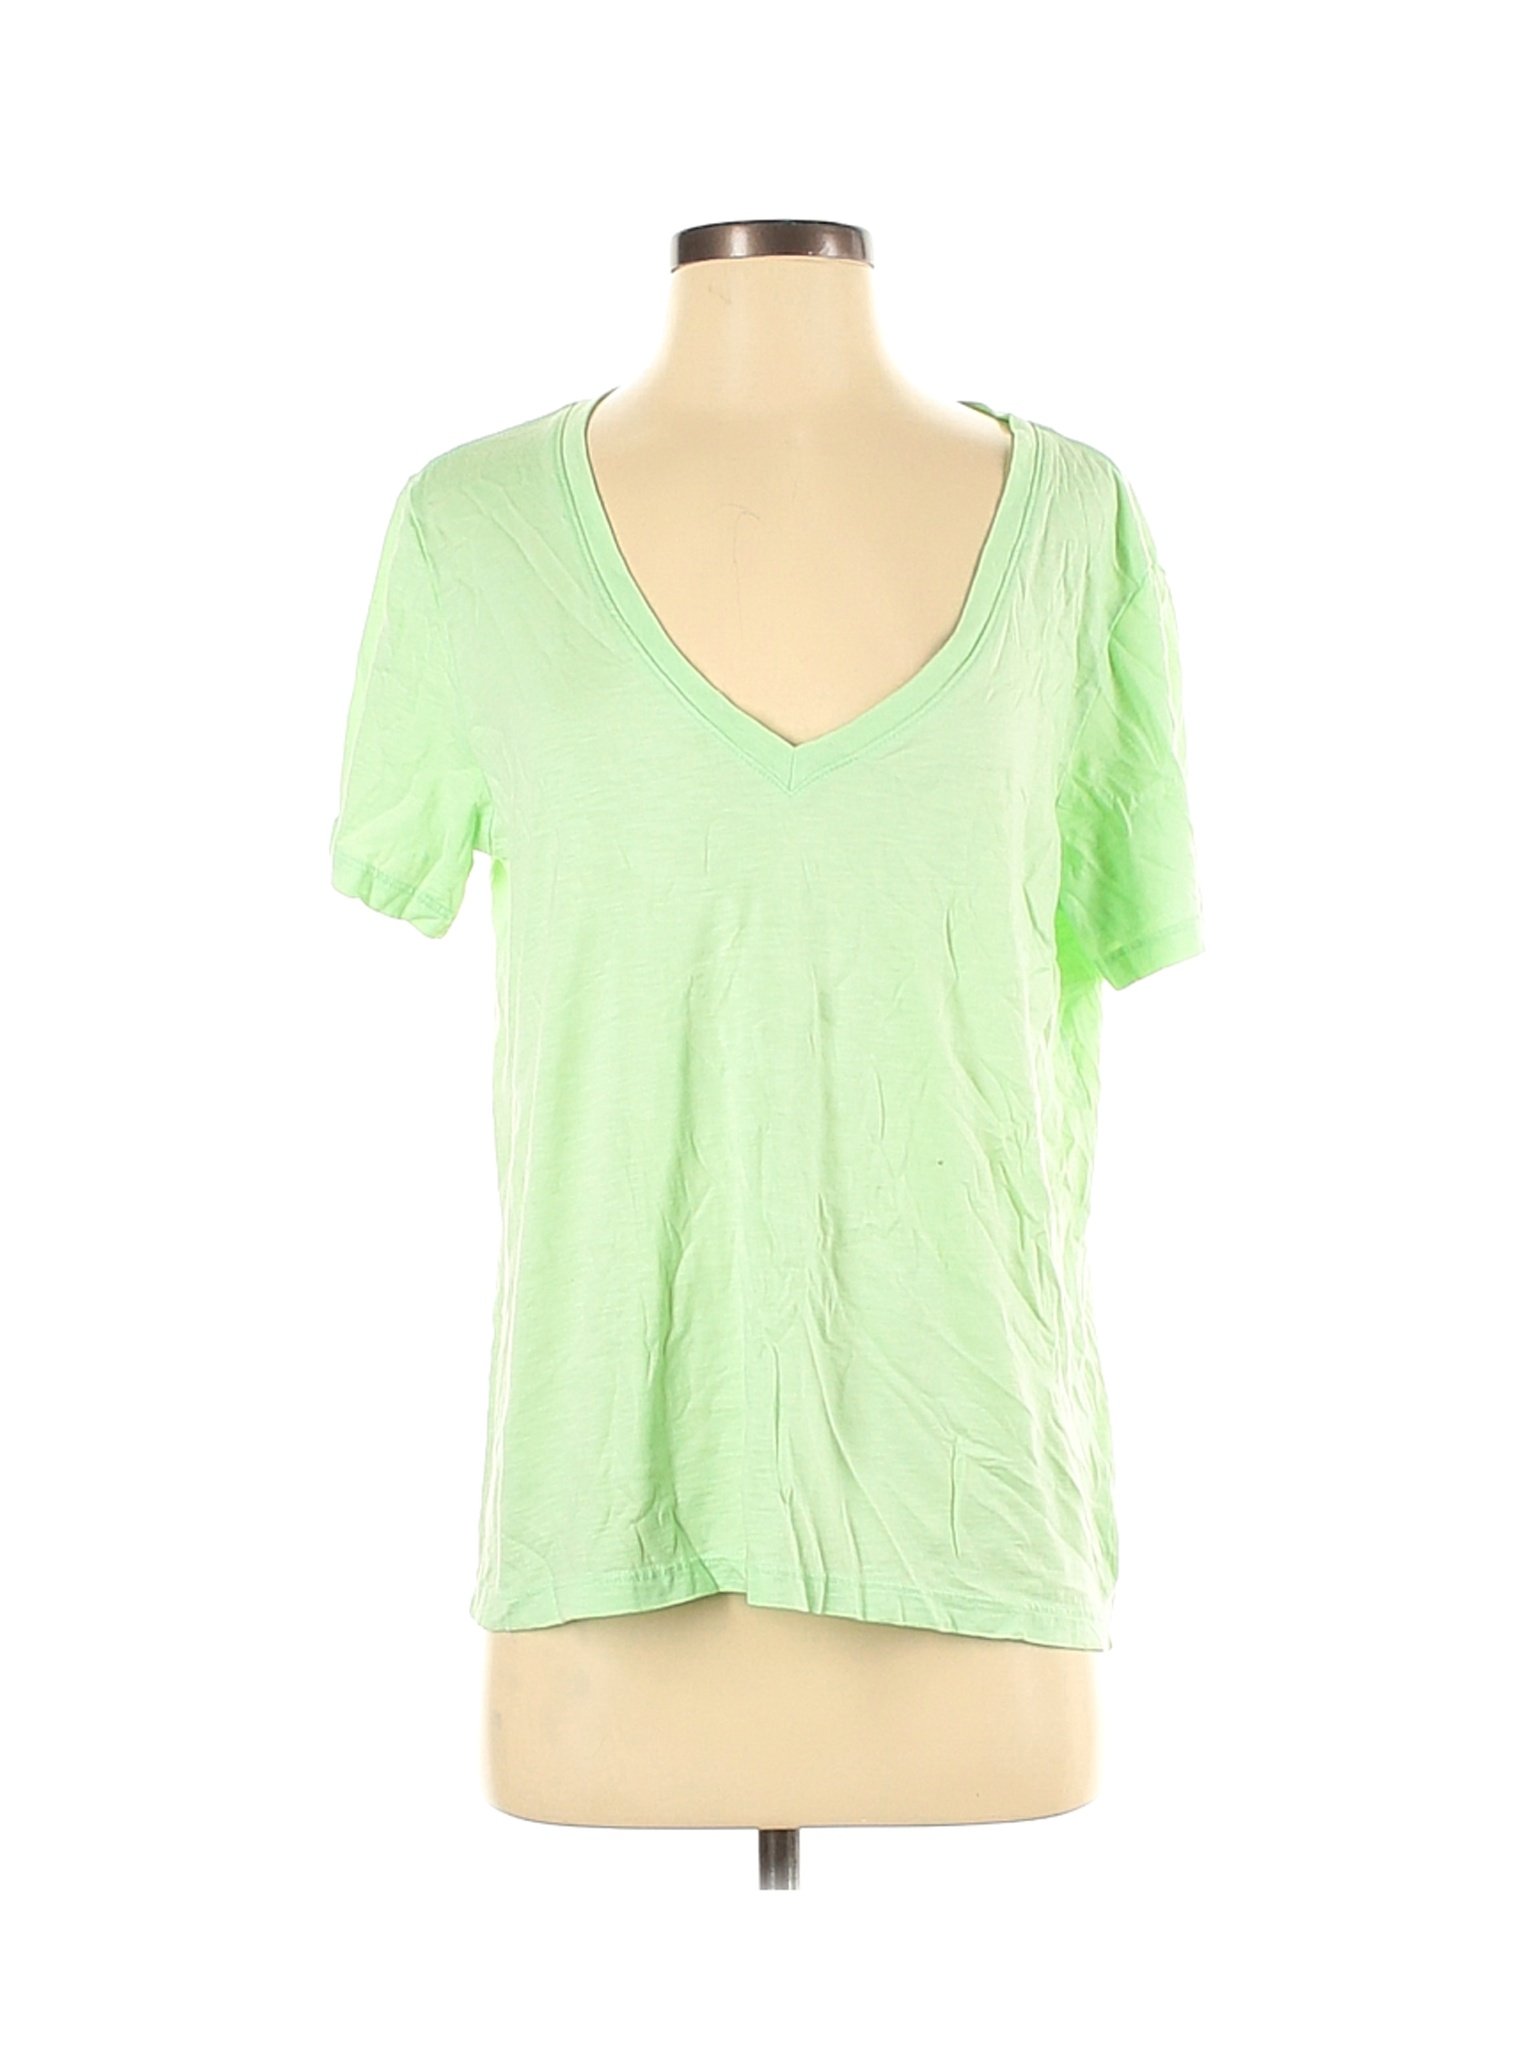 Marine Layer Women Green Short Sleeve T-Shirt S | eBay